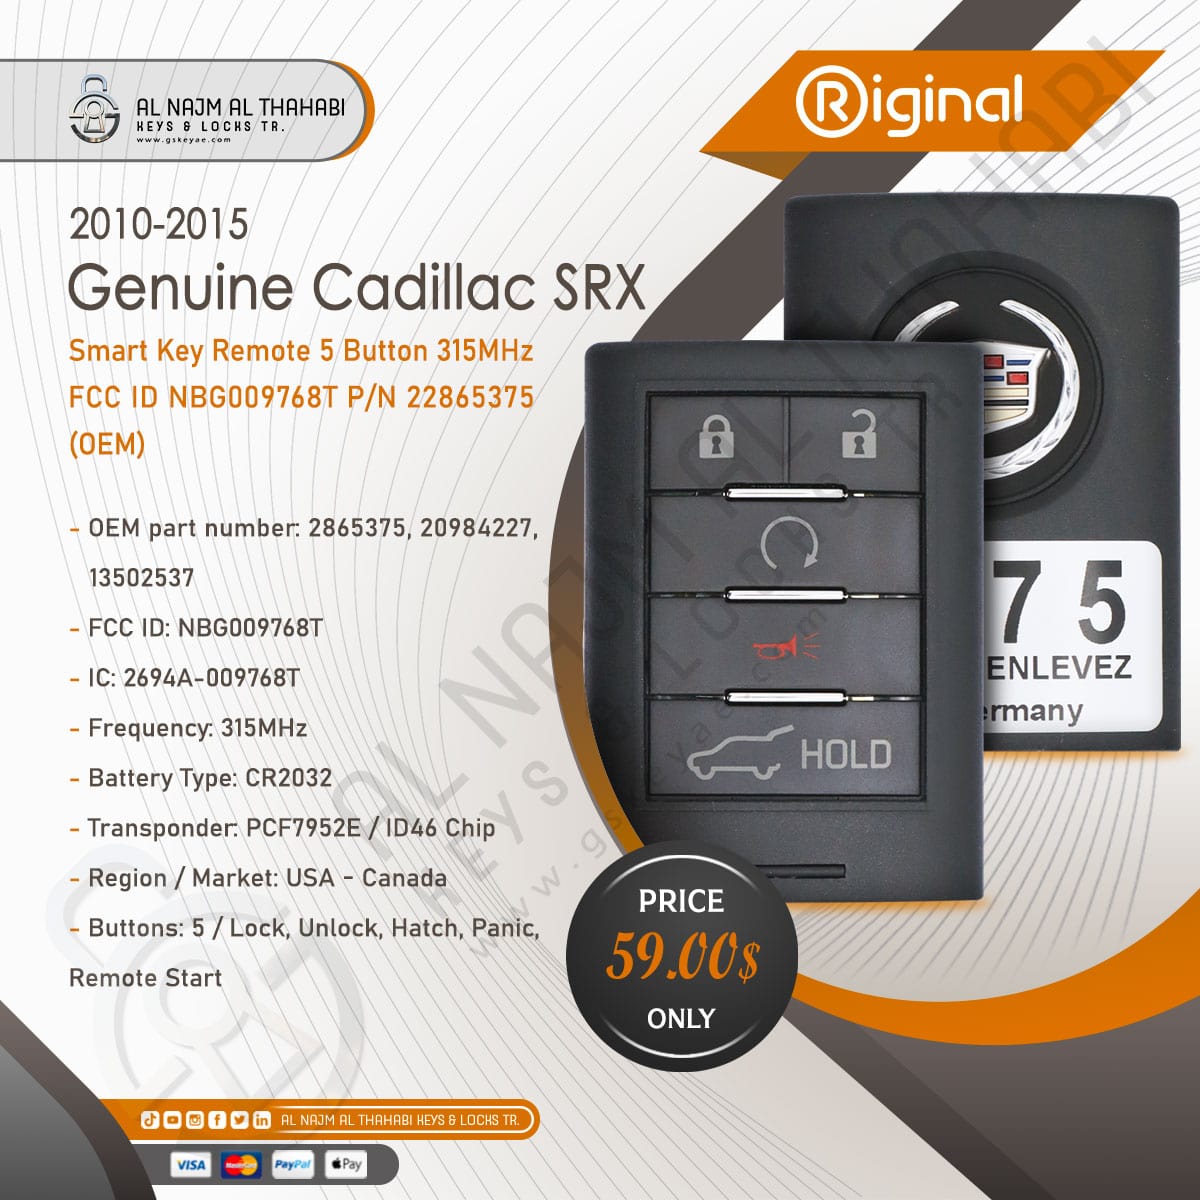 2010-2015 Genuine Cadillac SRX Smart Key Remote 5 Button 315MHz NBG009768T 22865375